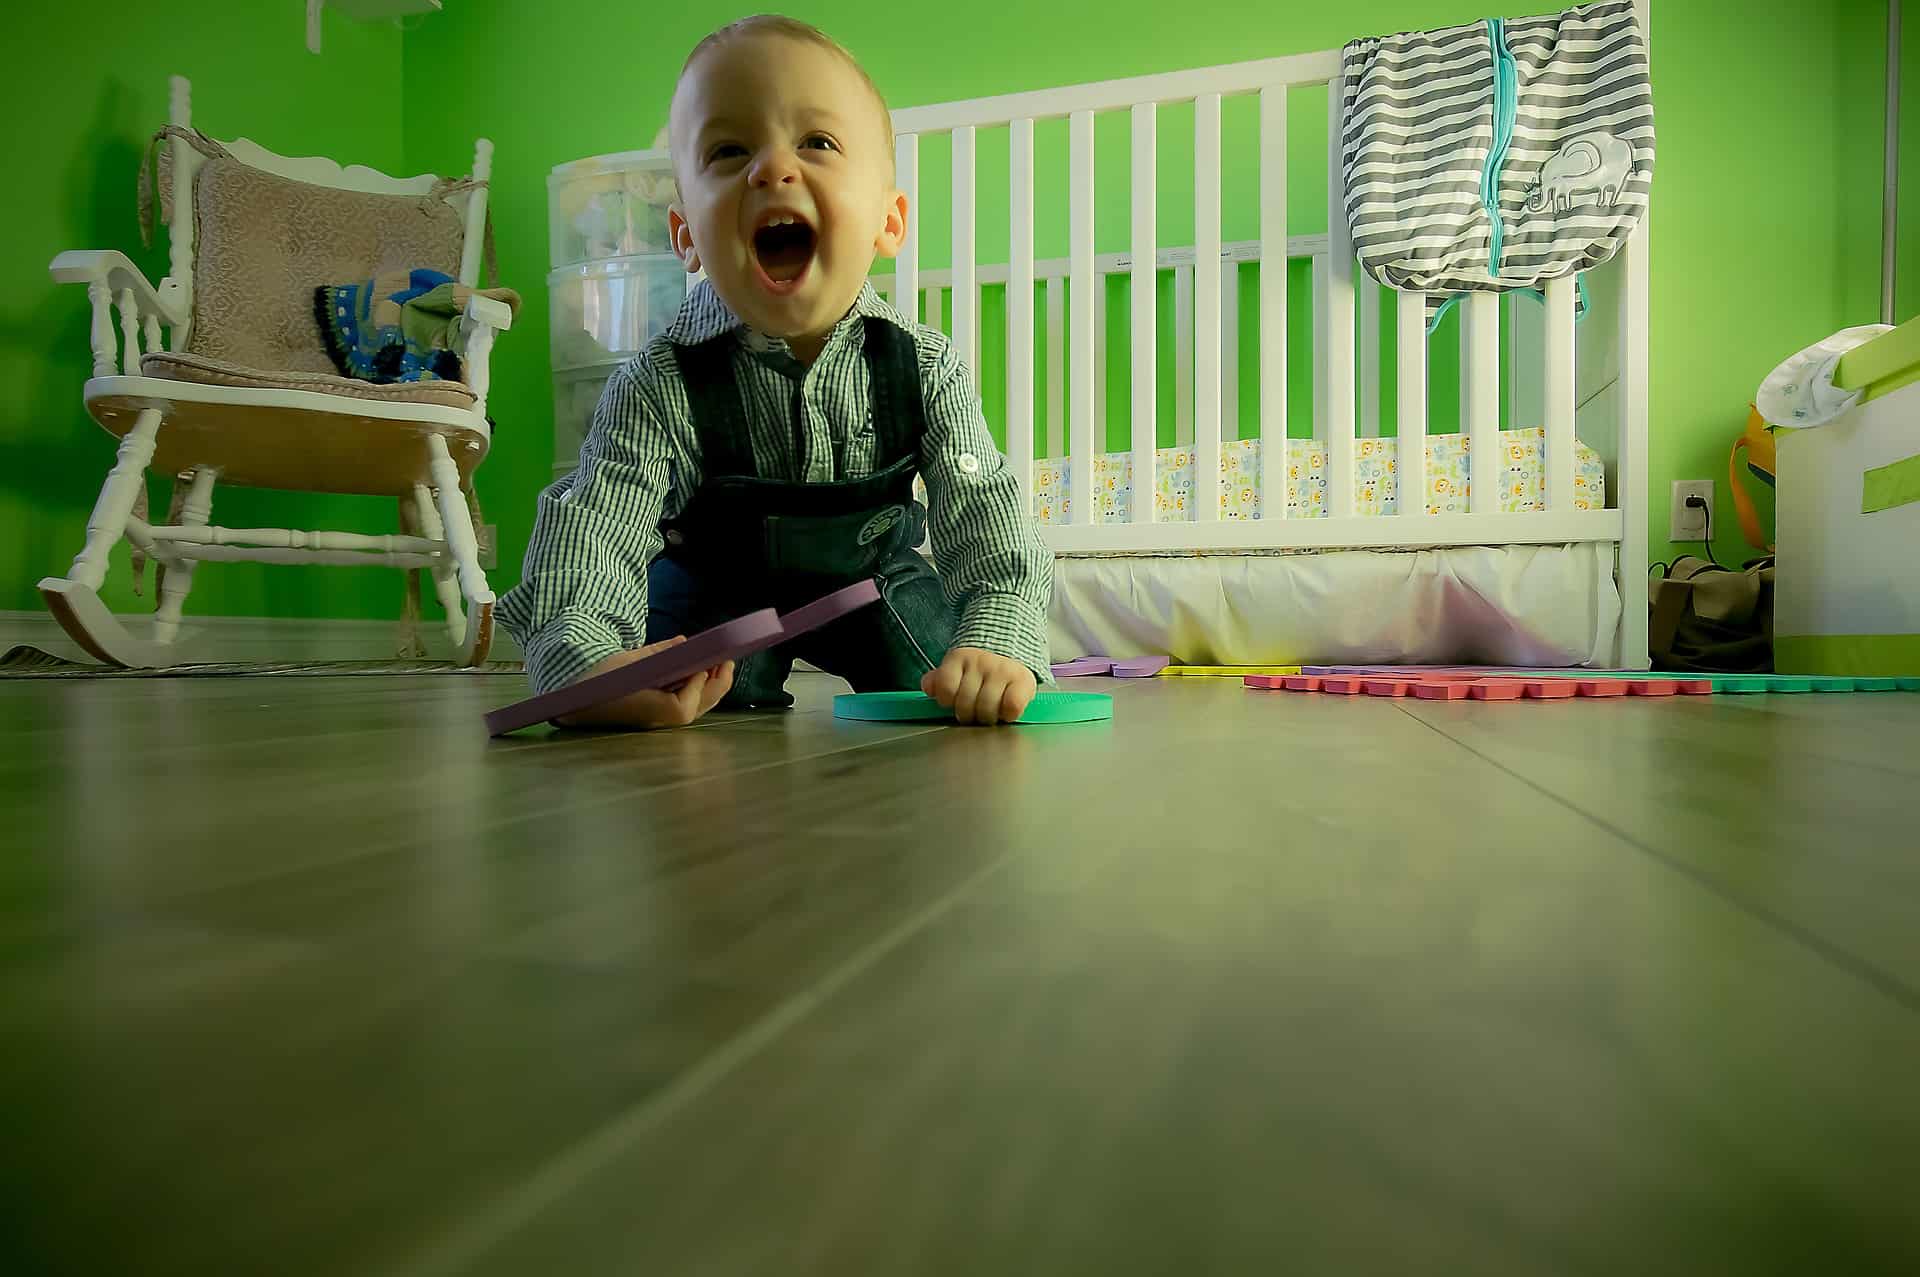 Playing on Wooden Floor In Nursery